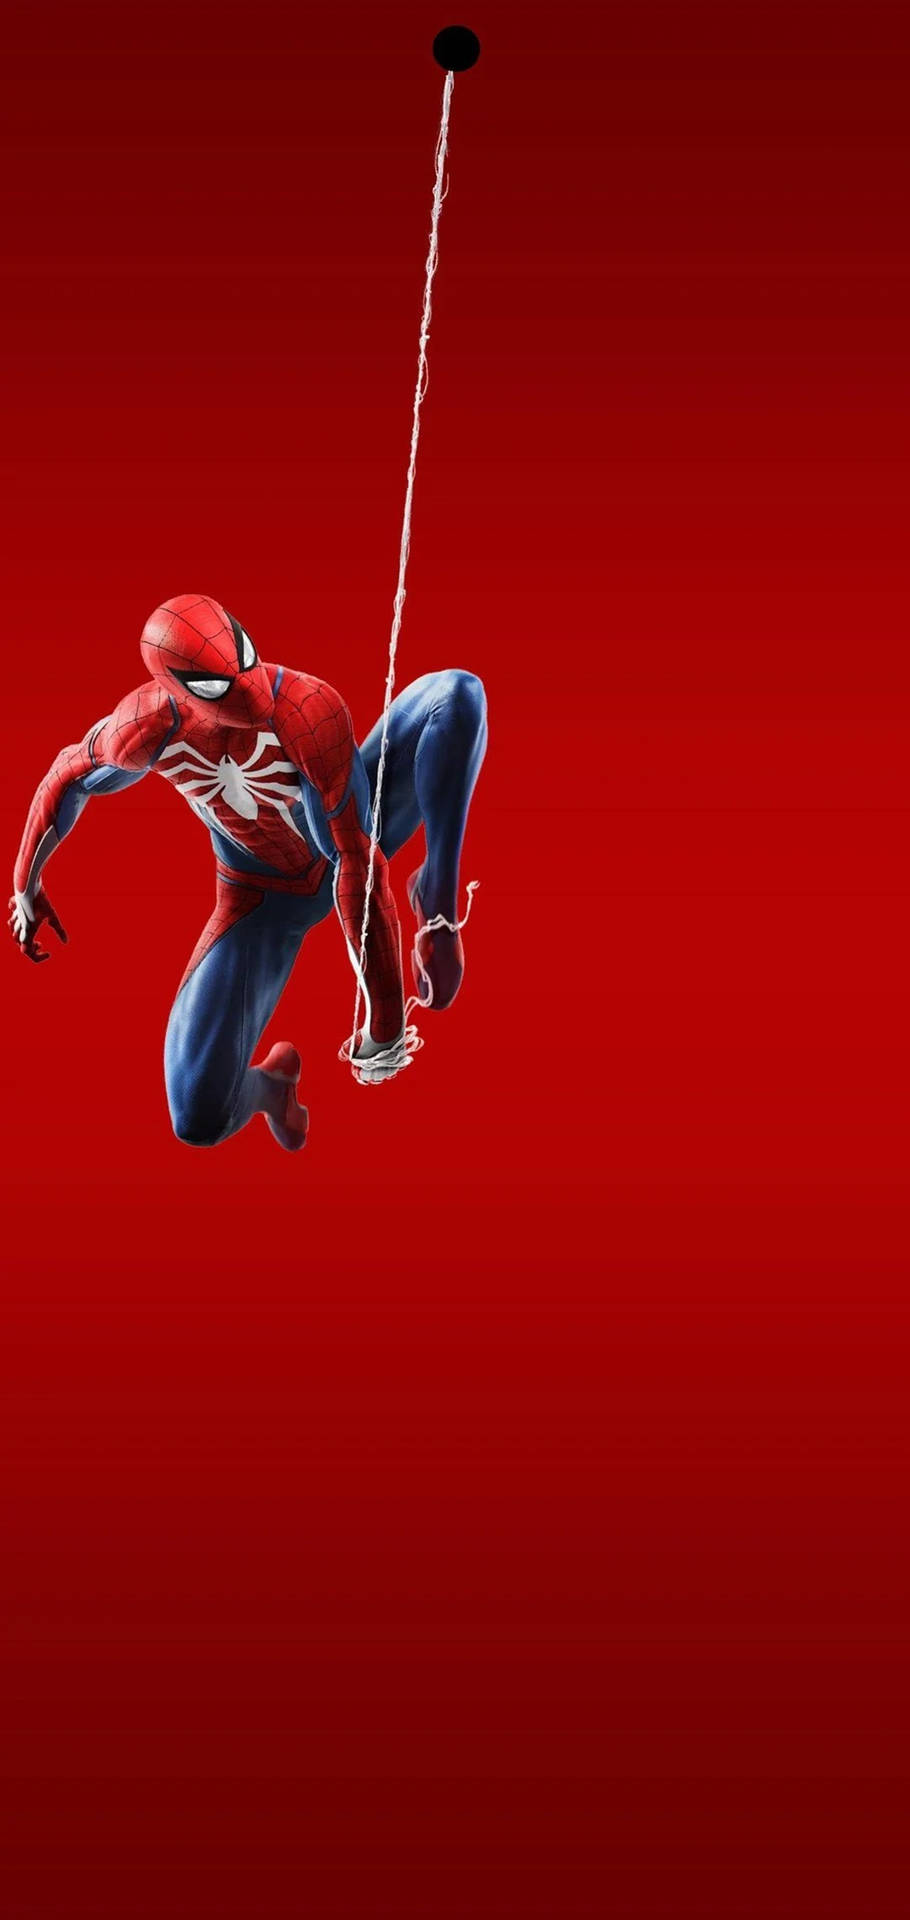 Spiderman Releasing Web Punch Hole 4k